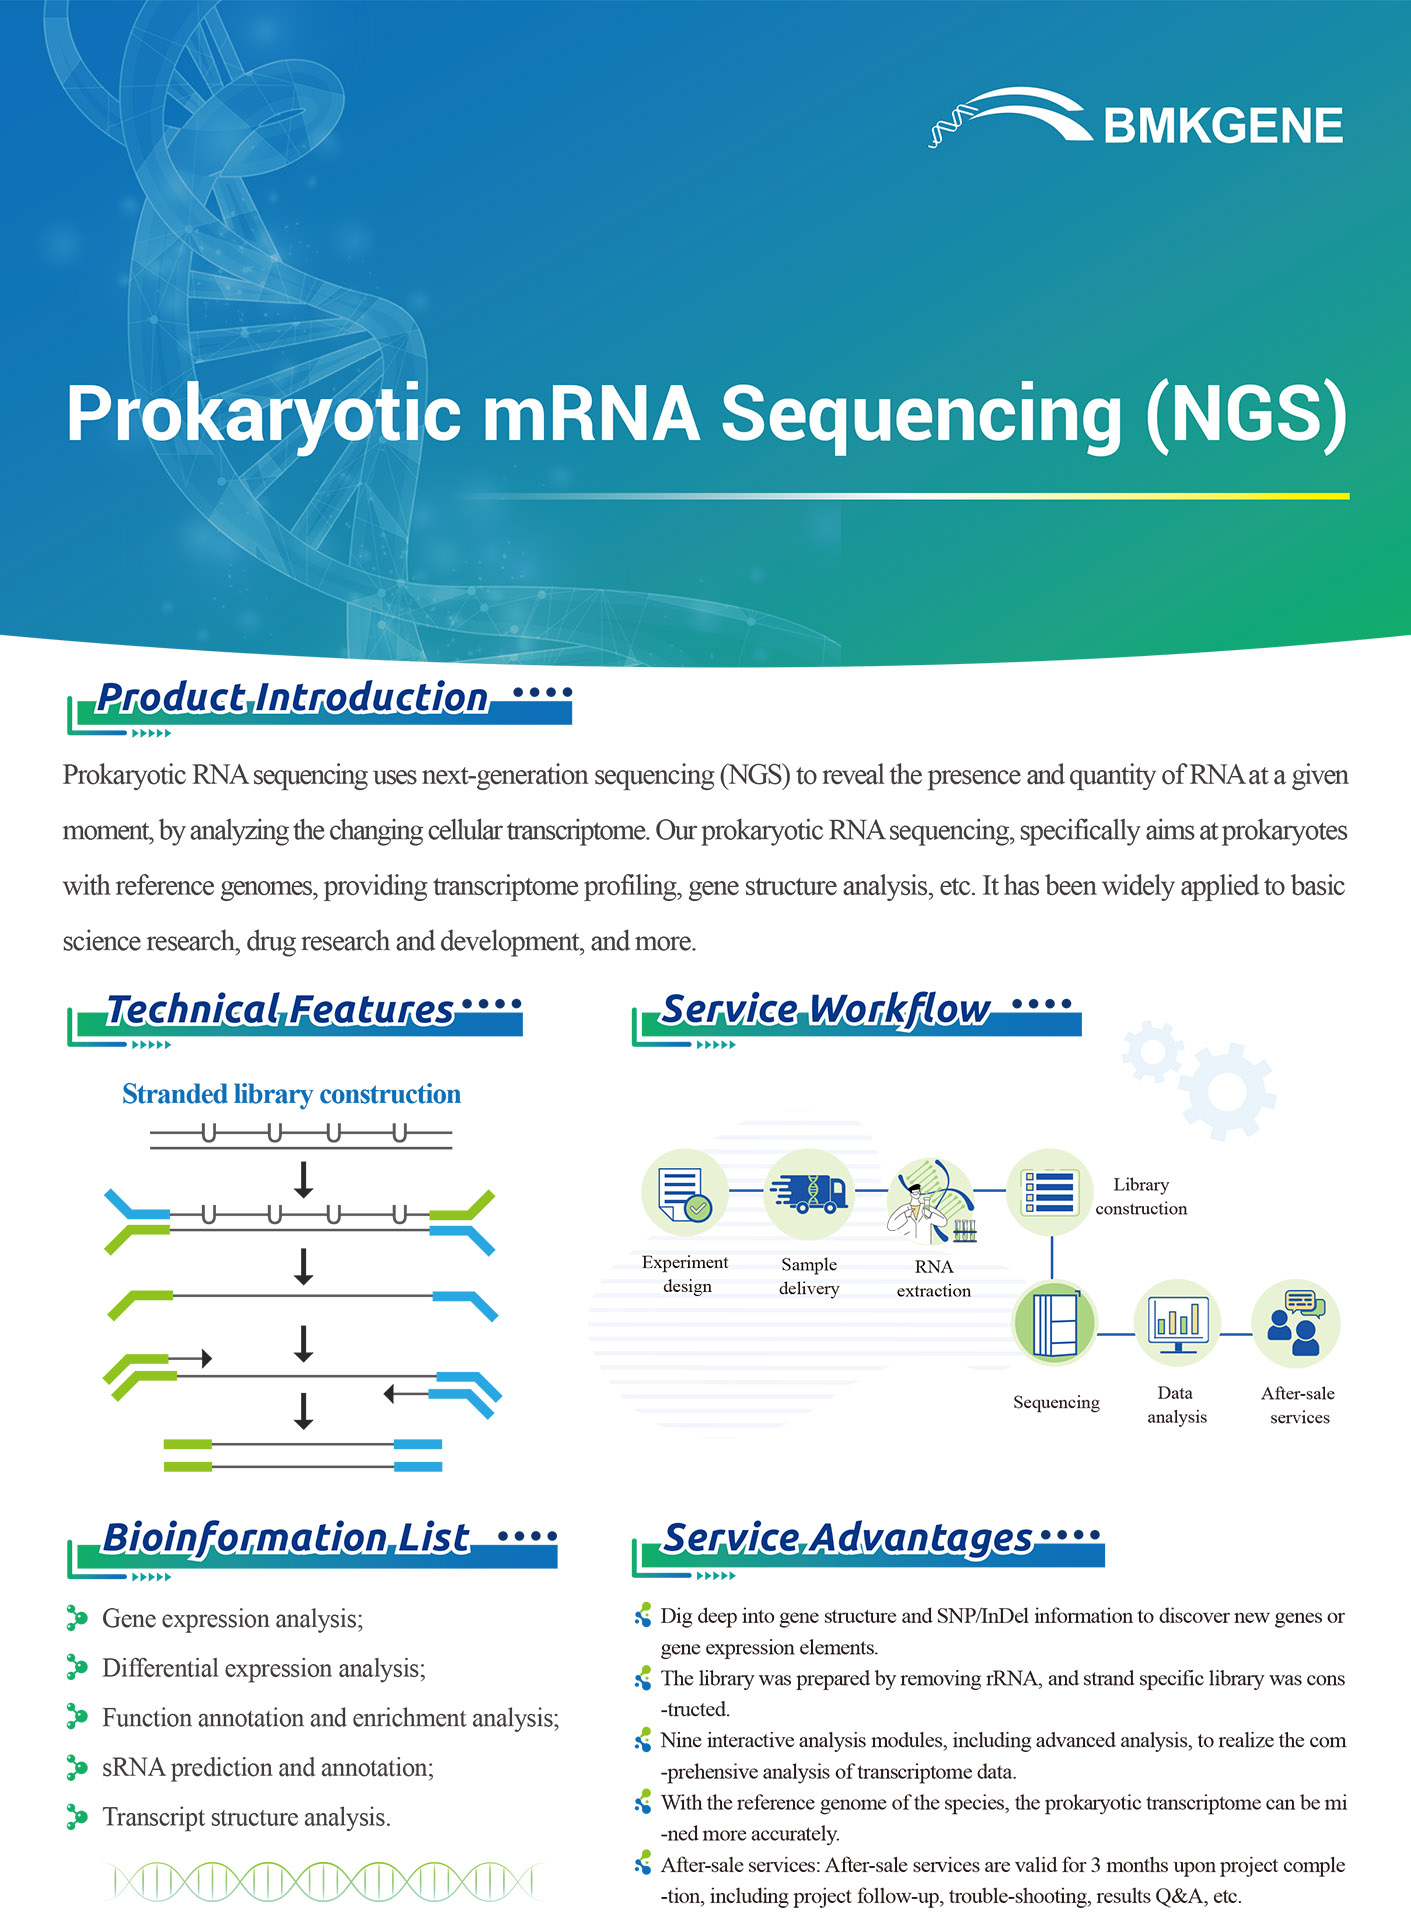 https://www.bmkgene.com/uploads/Prokaryotic-mRNA-Sequencing-NGS-BMKGENE-2023.121.pdf